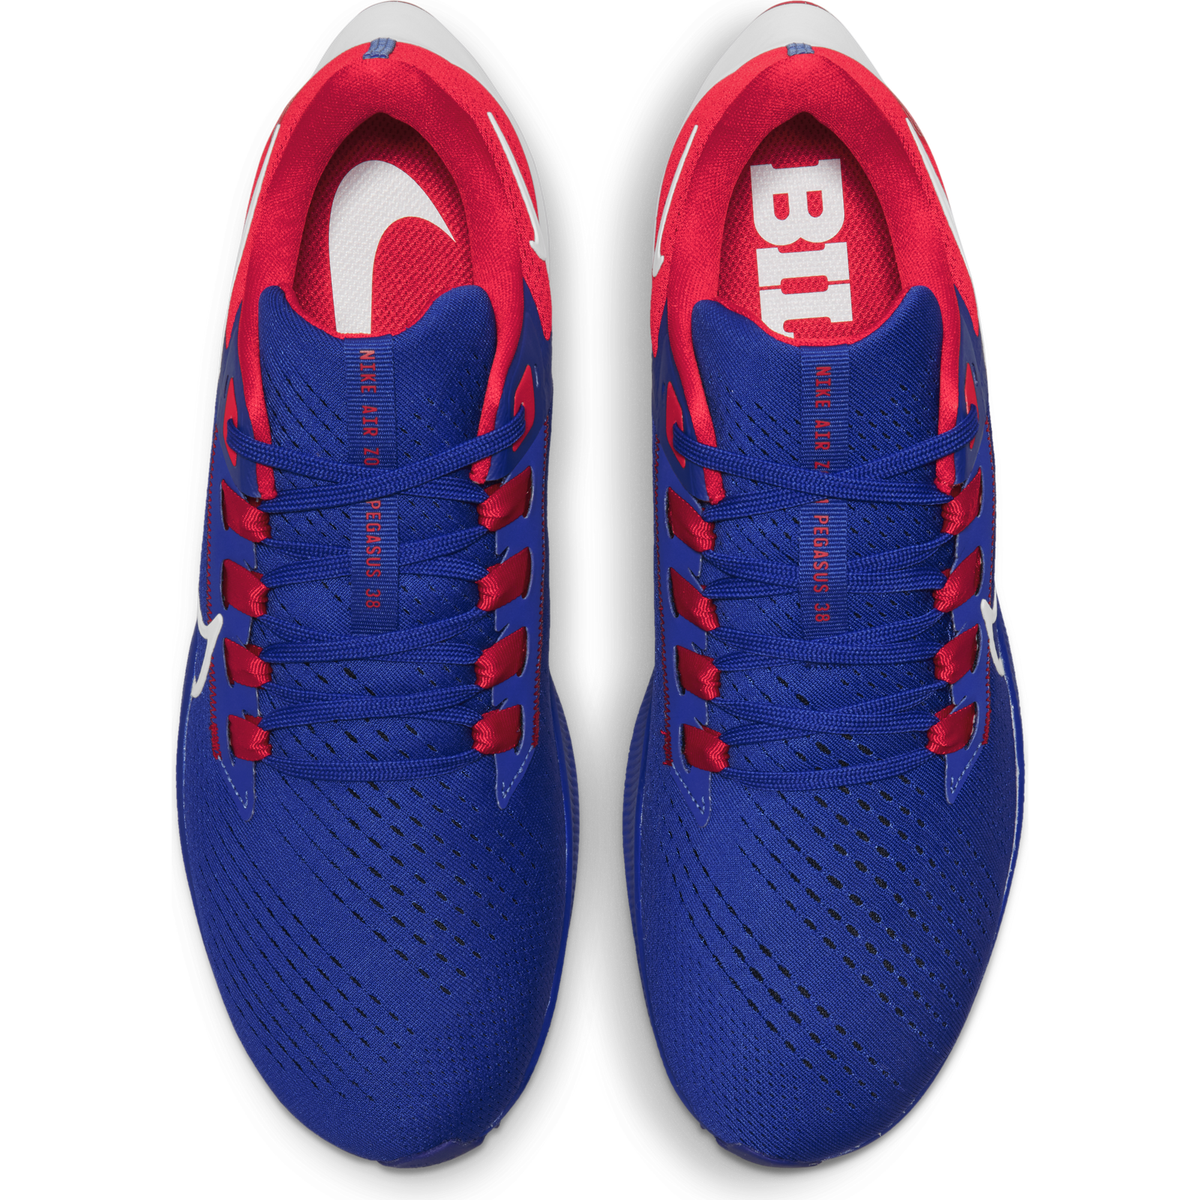 Get your Buffalo Bills Nike Pegasus Sneakers here! - Buffalo Rumblings